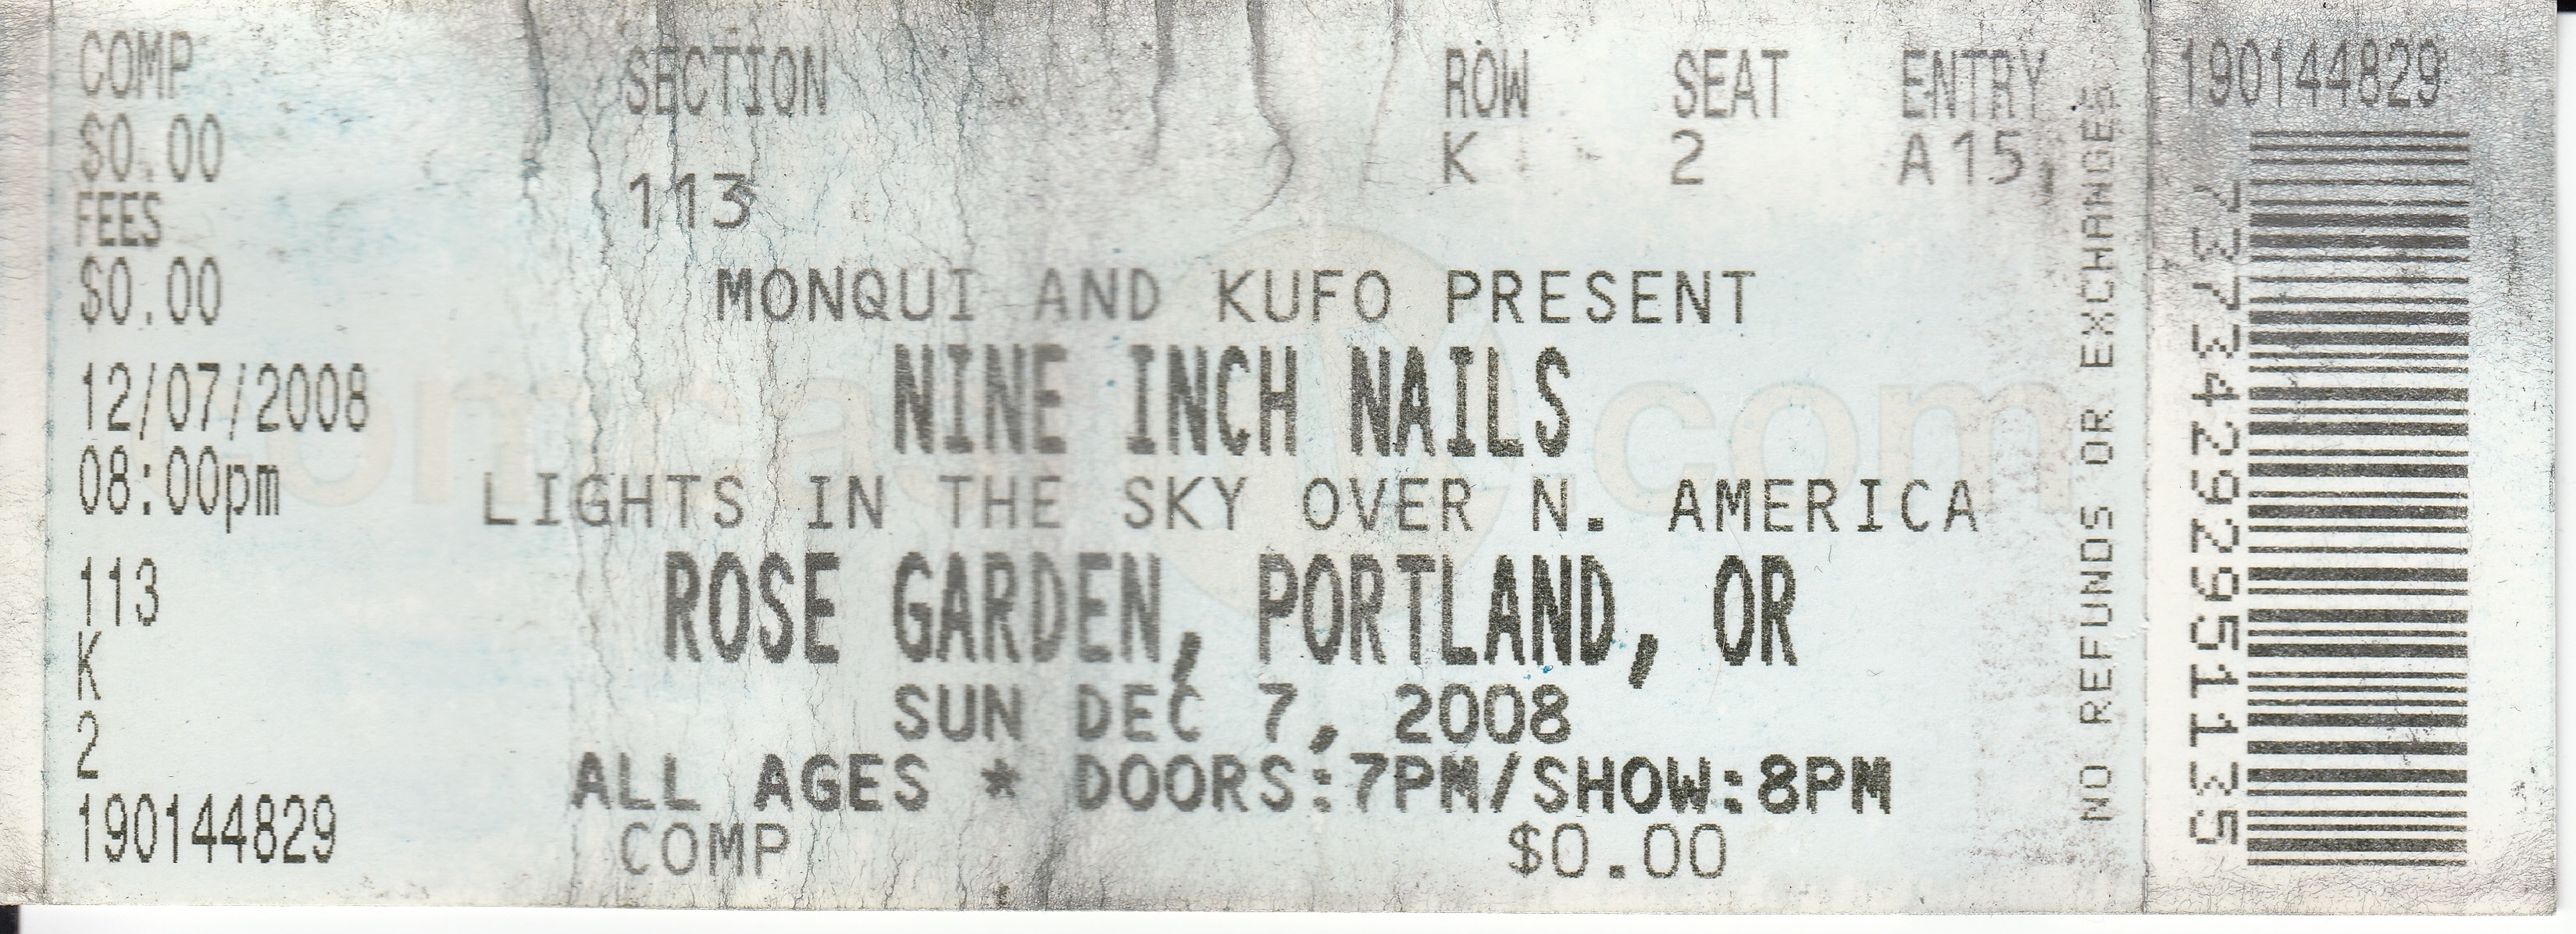 12/07/2008 Ticket